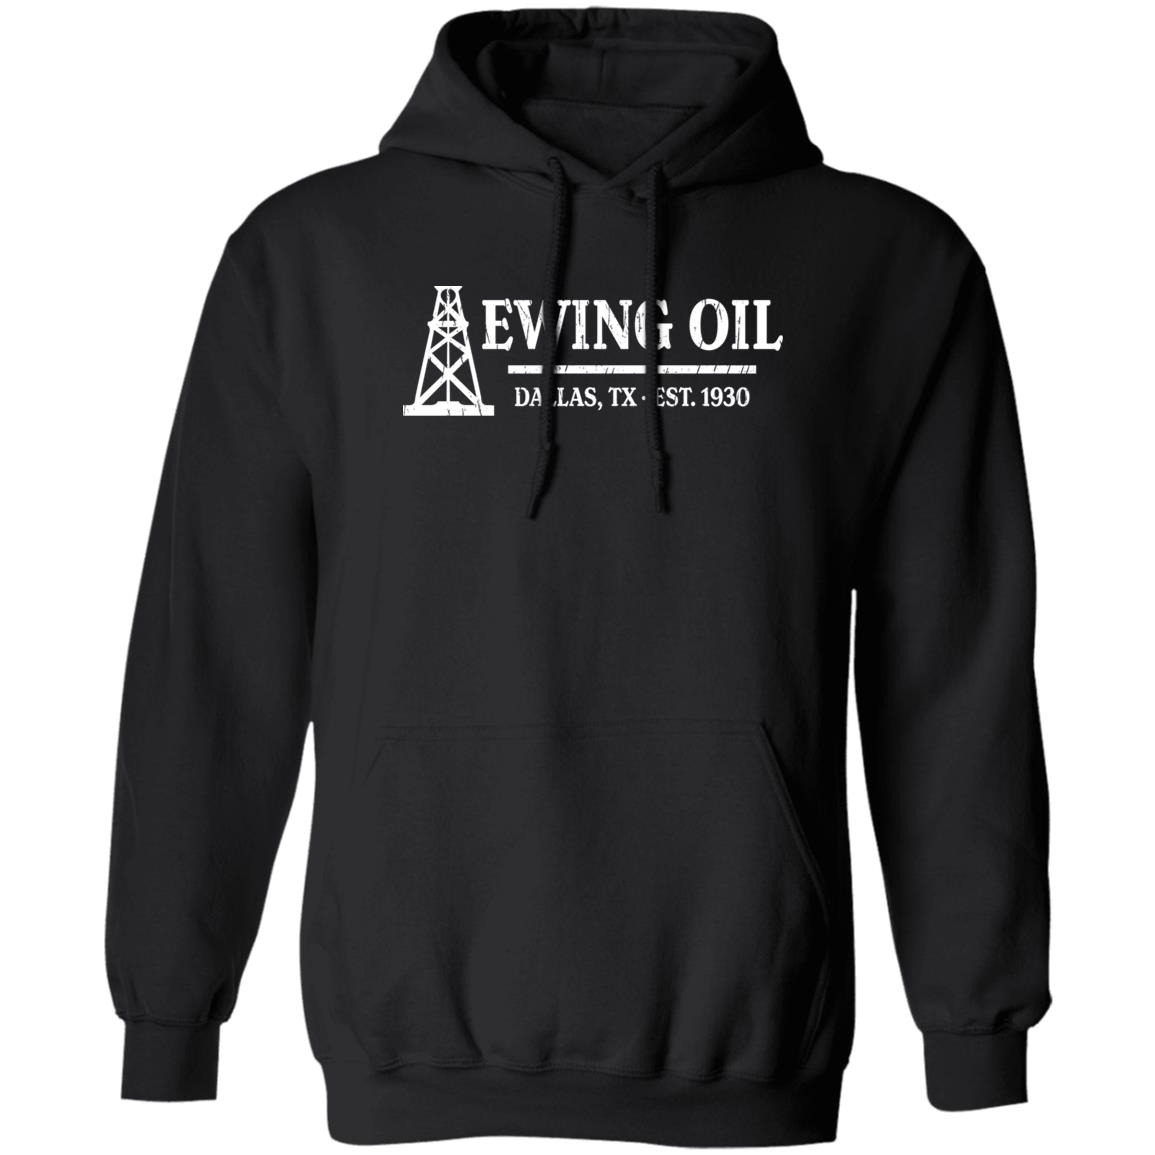 Ewing Oil Dallas Tx Est 1930 Shirt 1